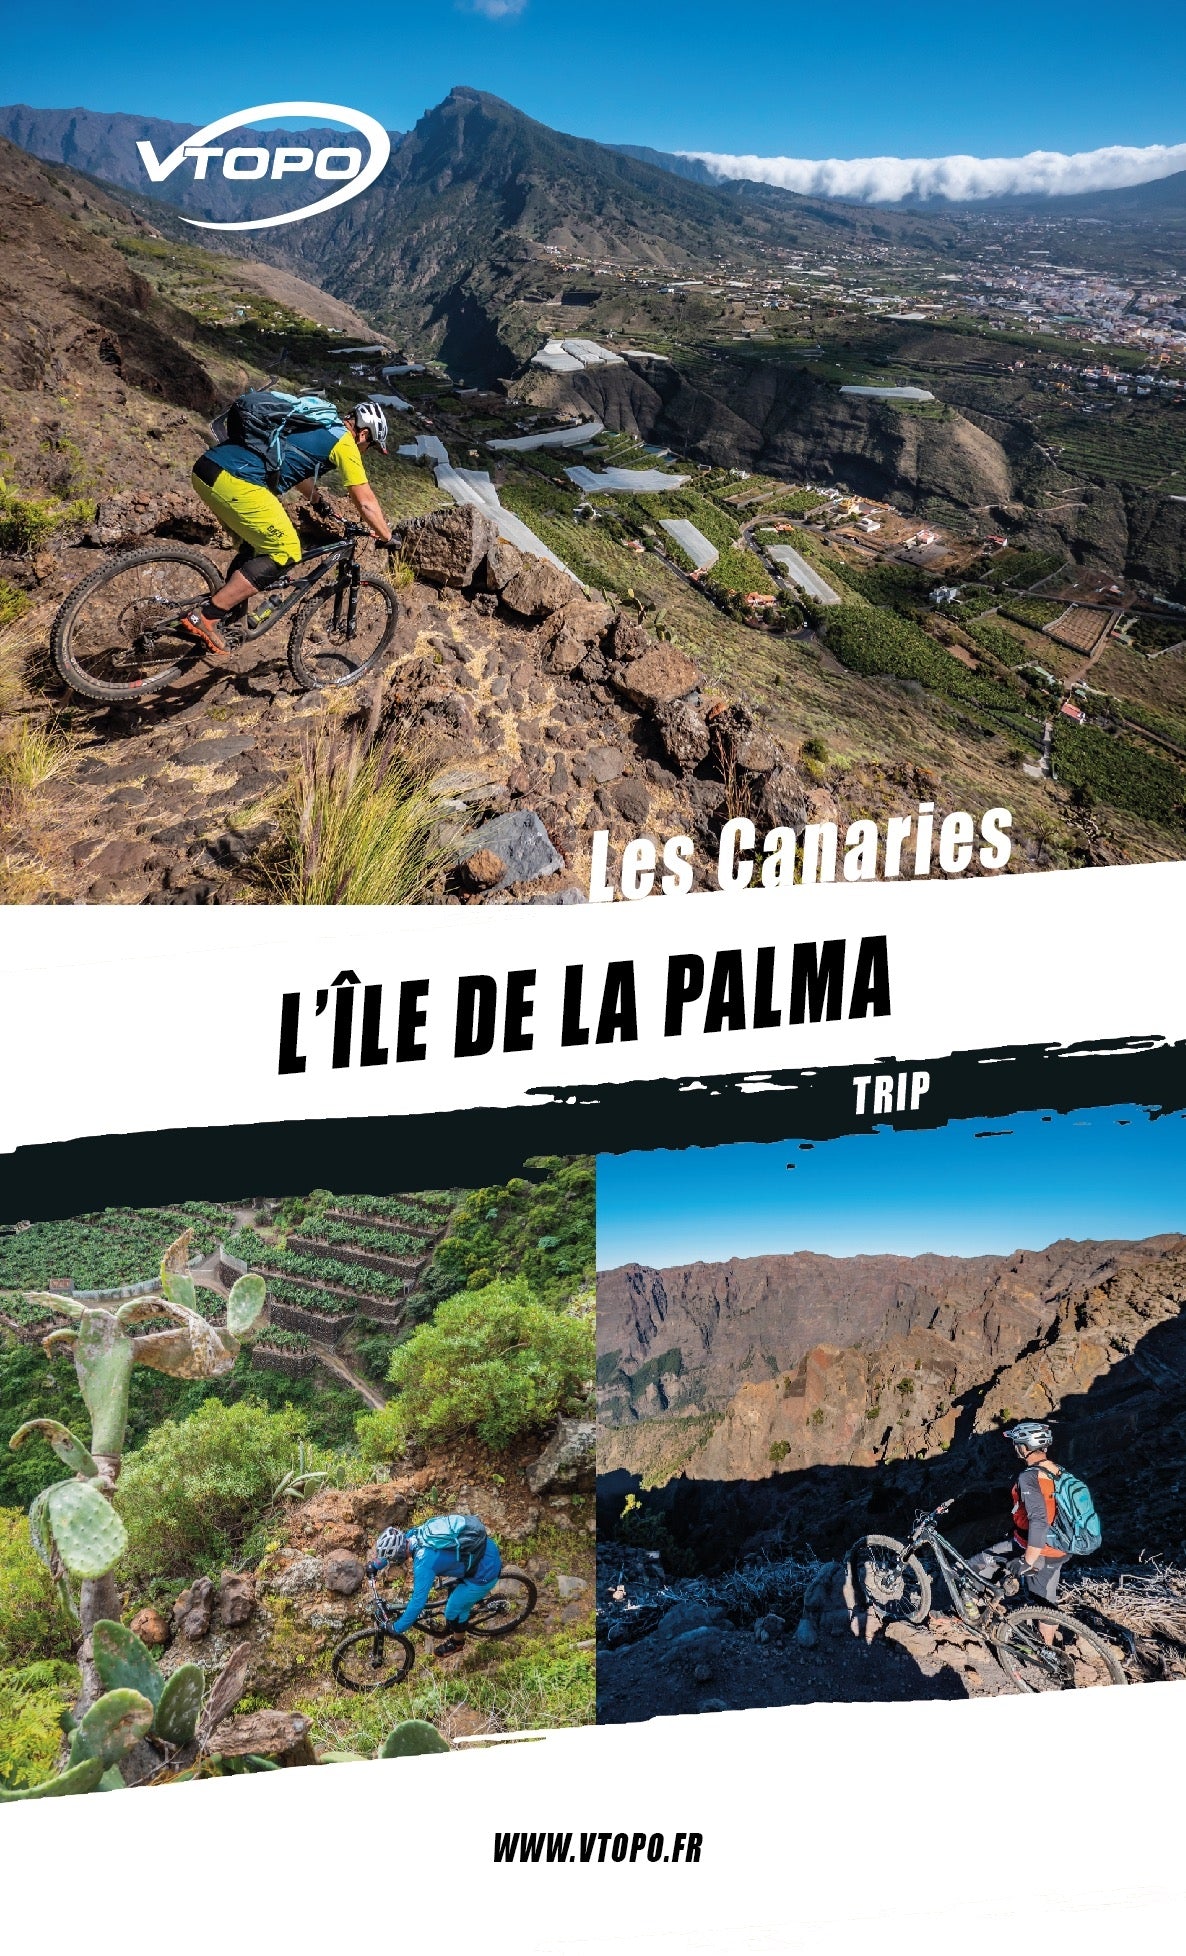 VTOPO MTB Trip La Palma The Canary Islands - eBook